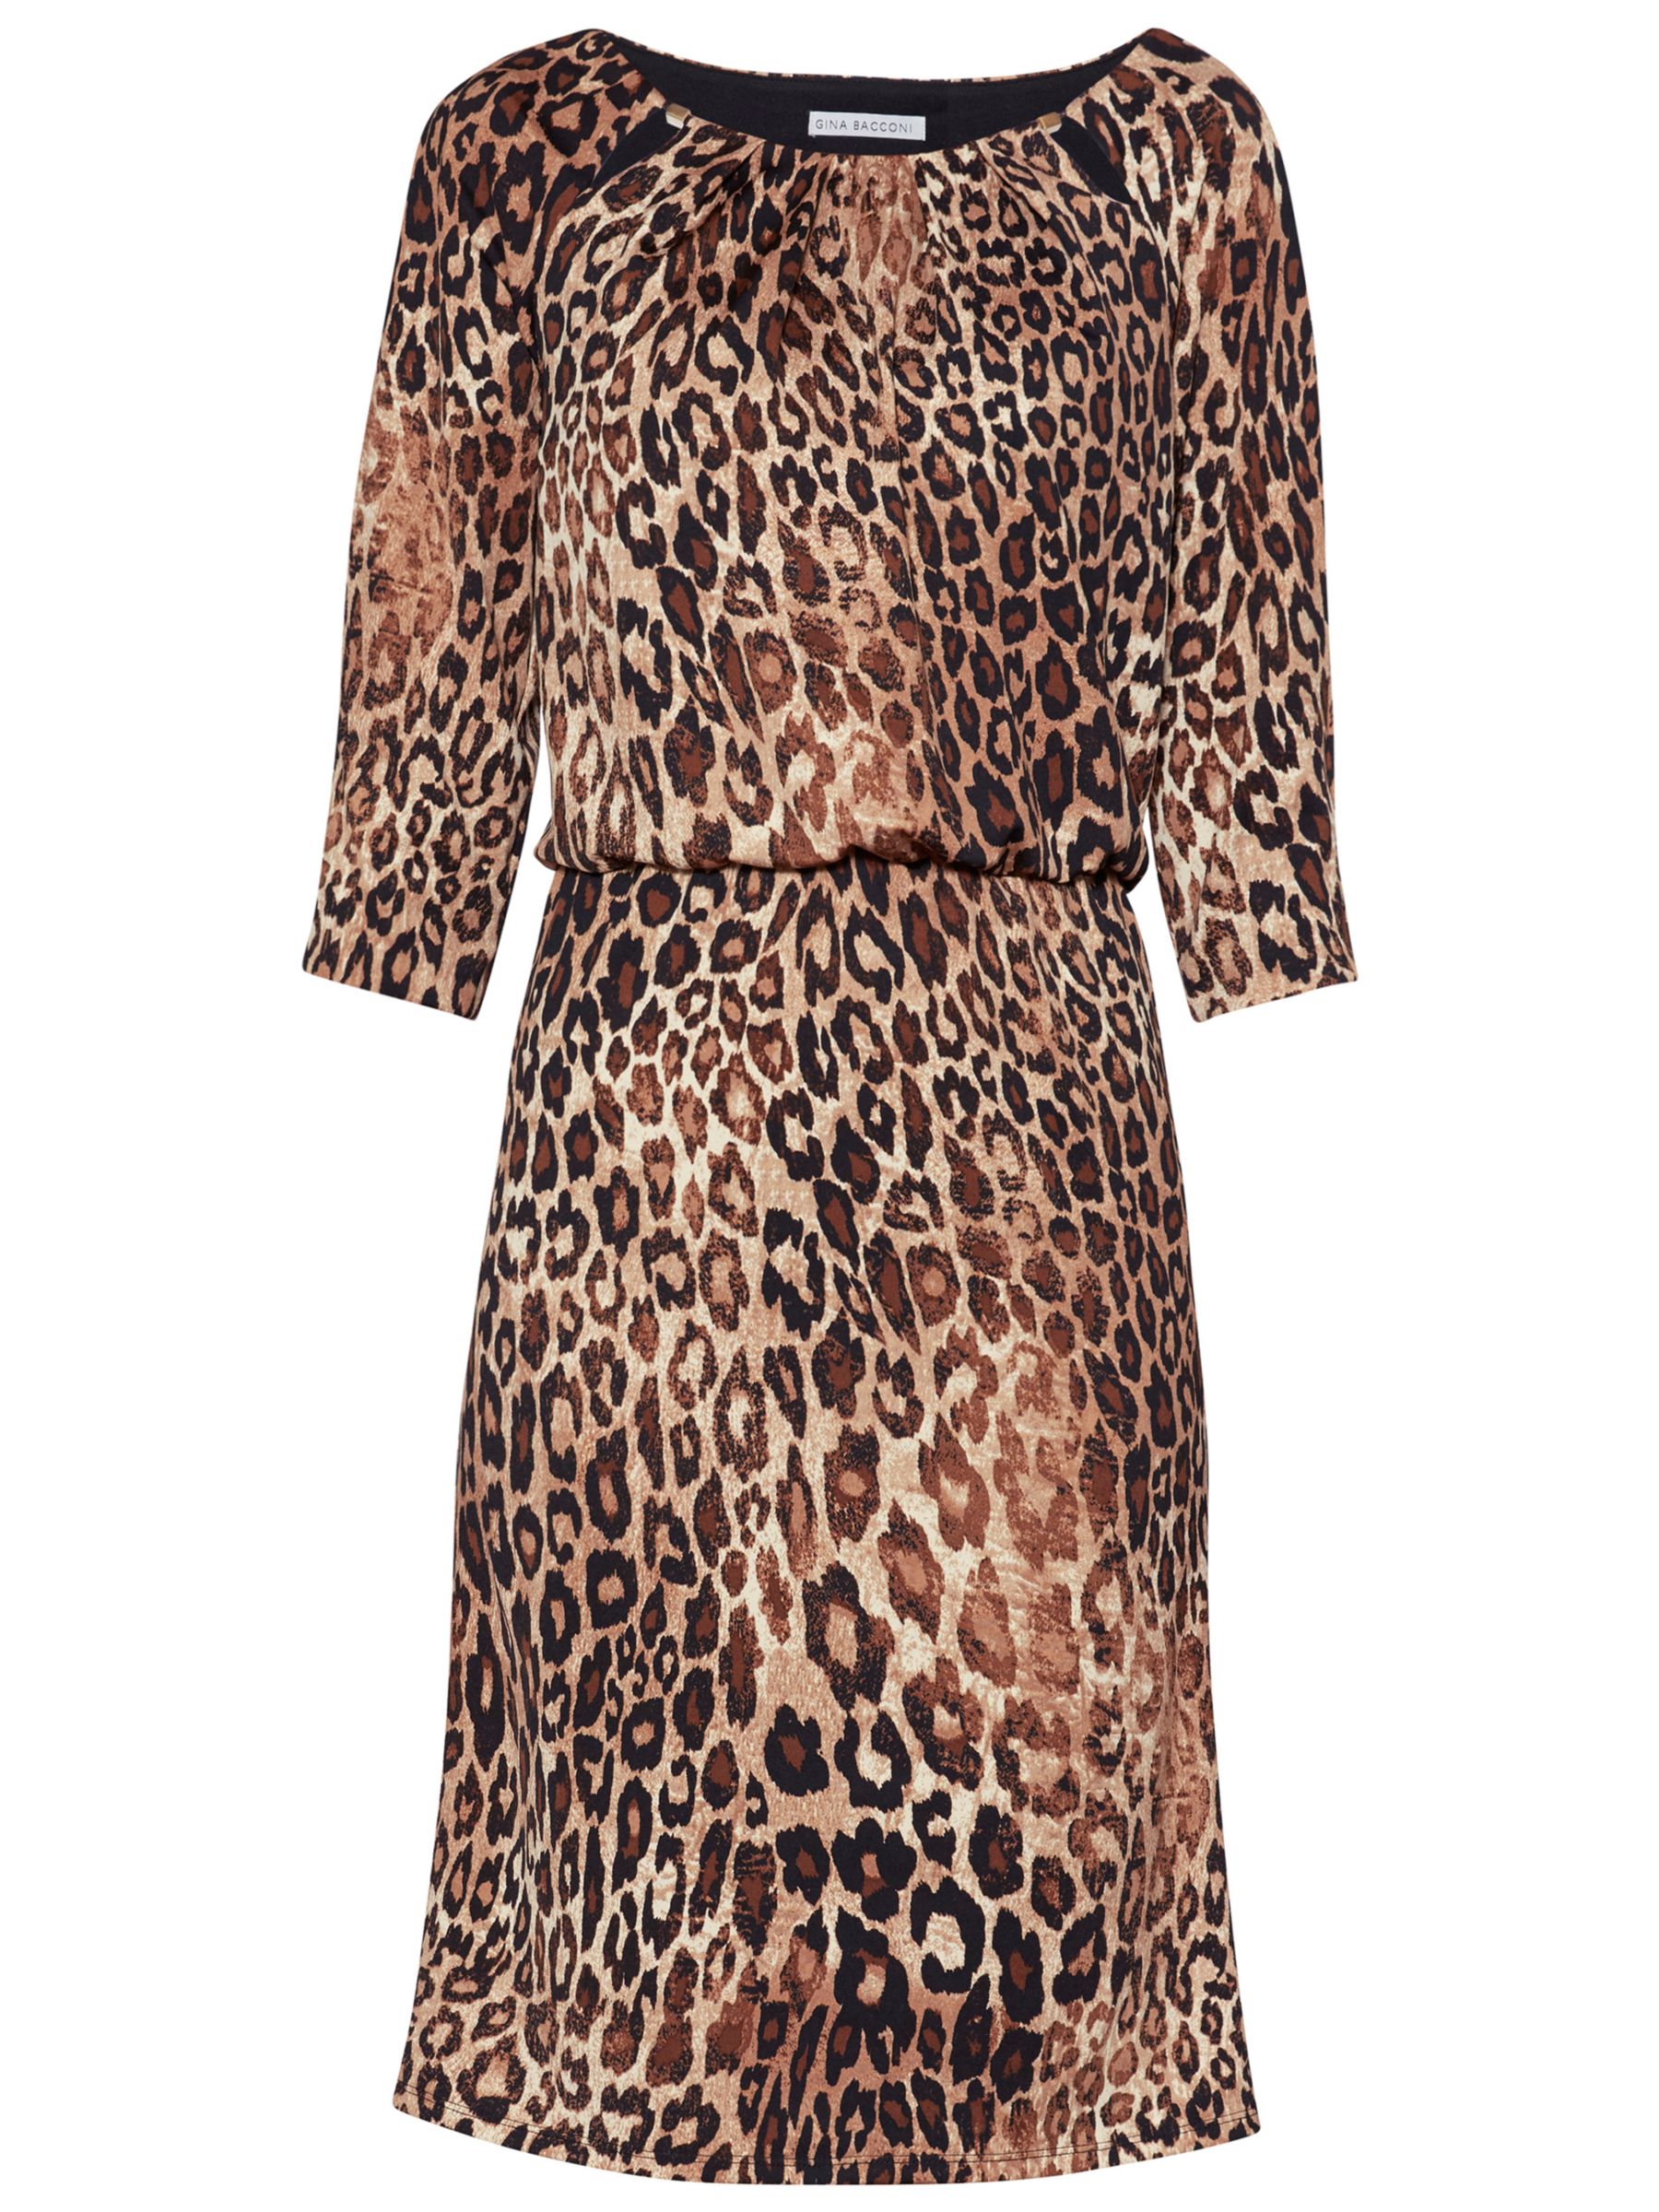 Gina Bacconi Ines Leopard Print Dress, Brown/Black at John Lewis